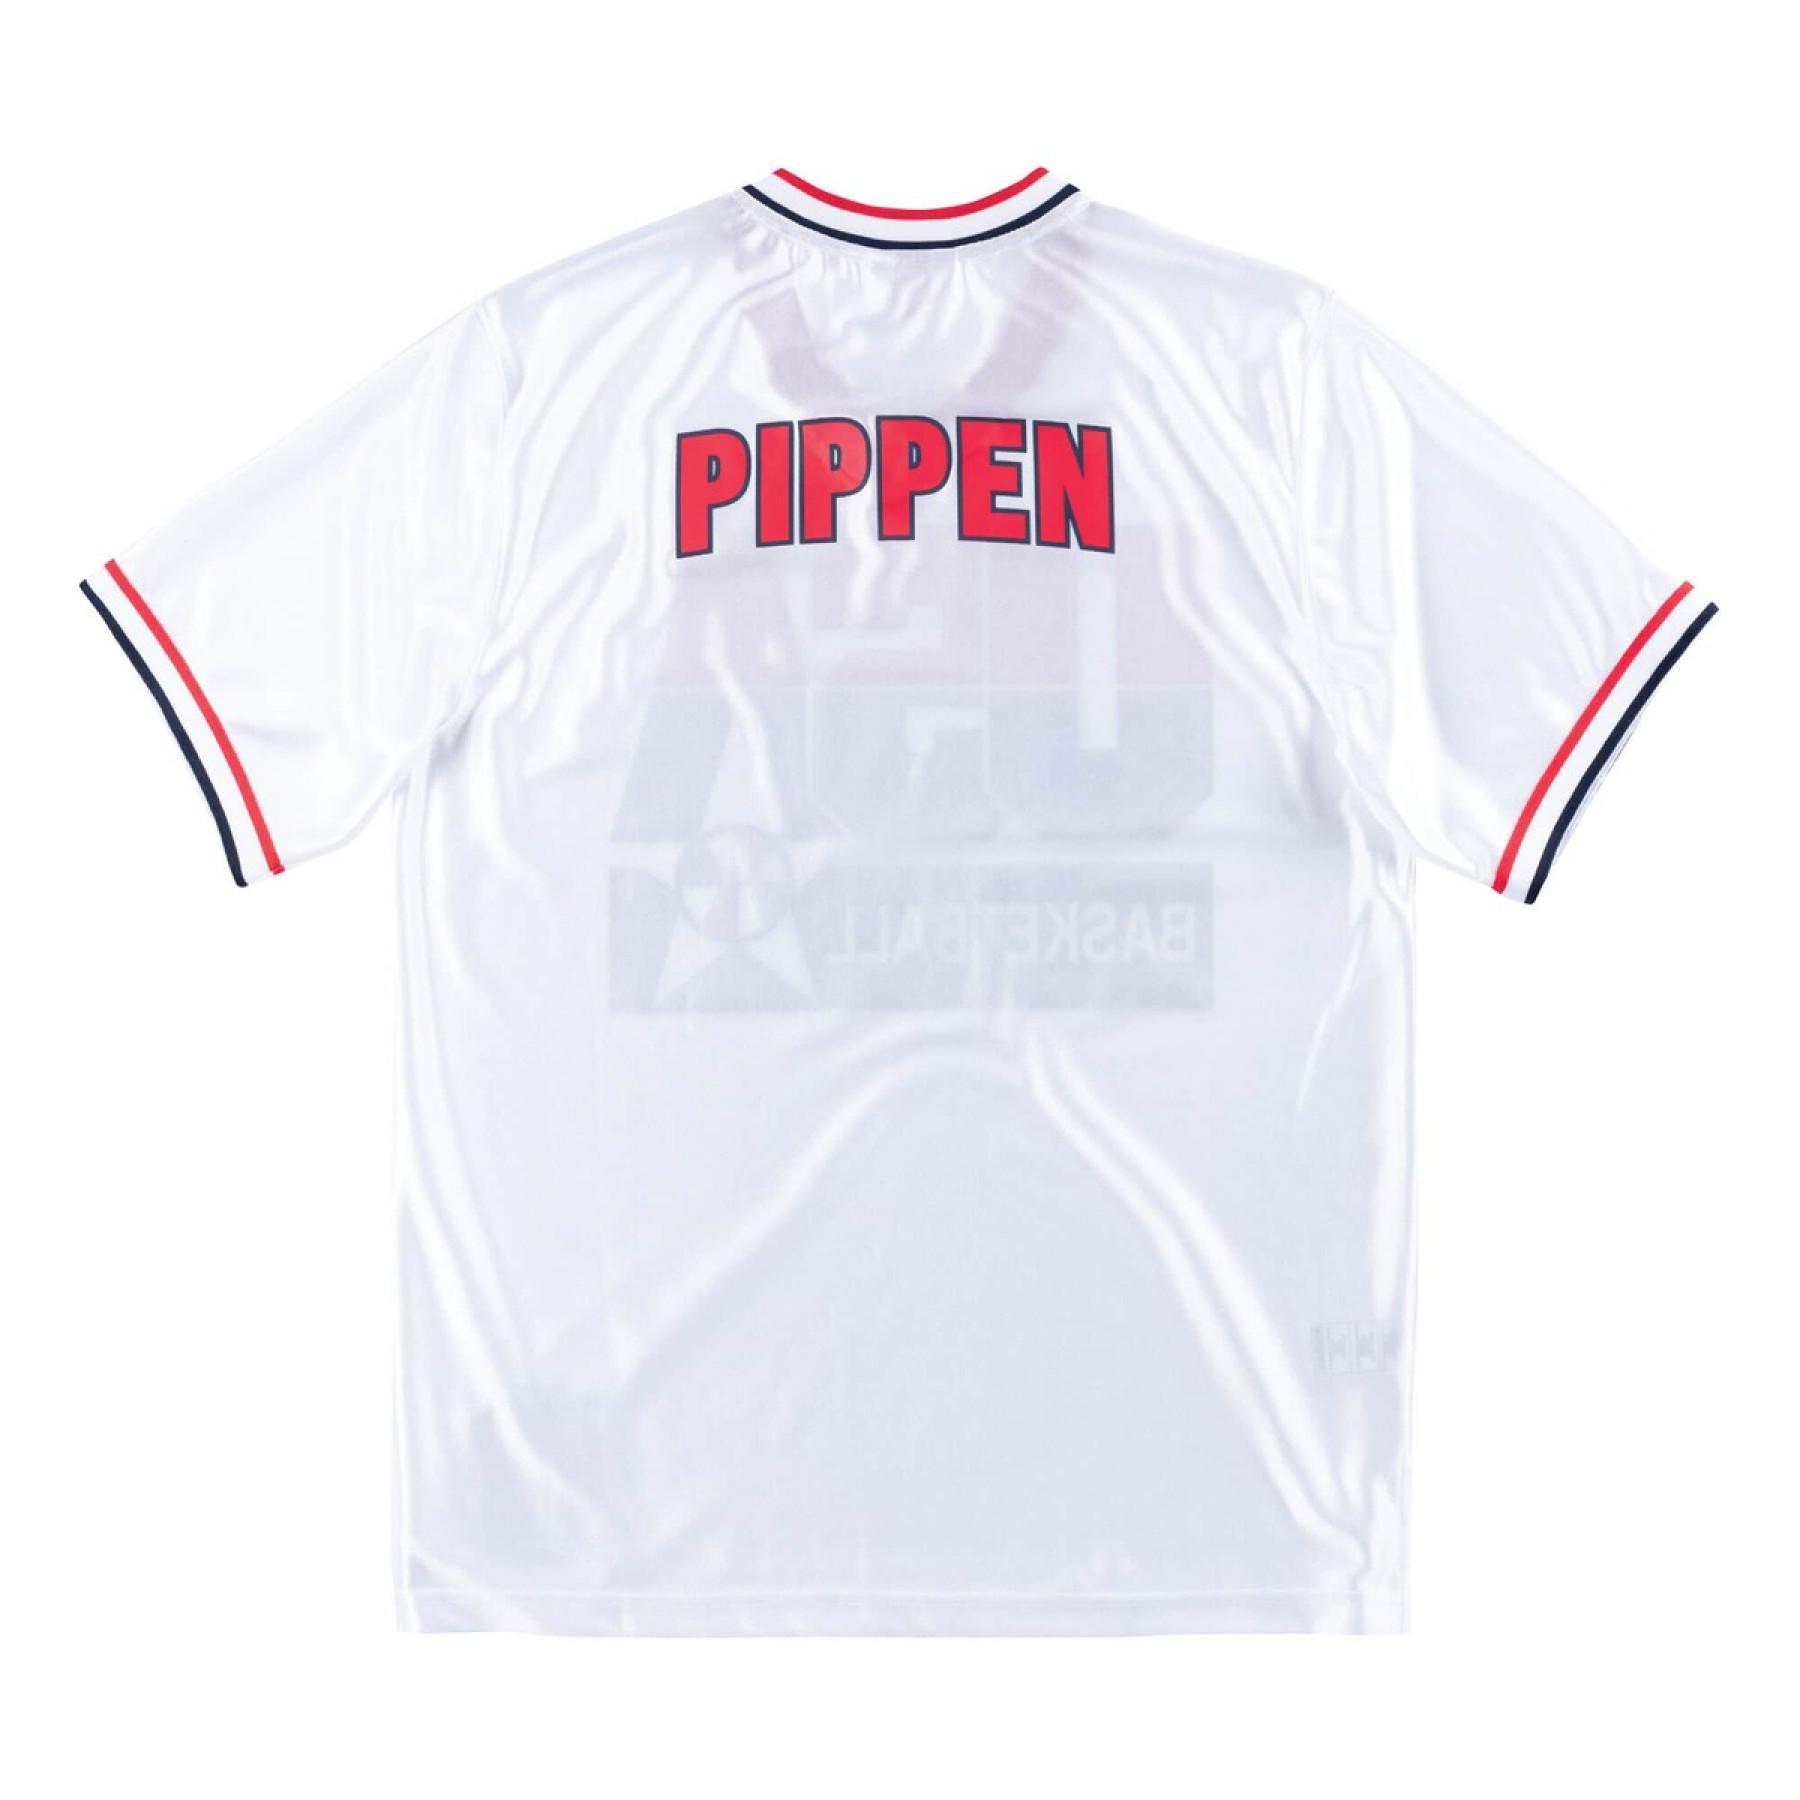 Authentic team jersey USA Scottie Pippen